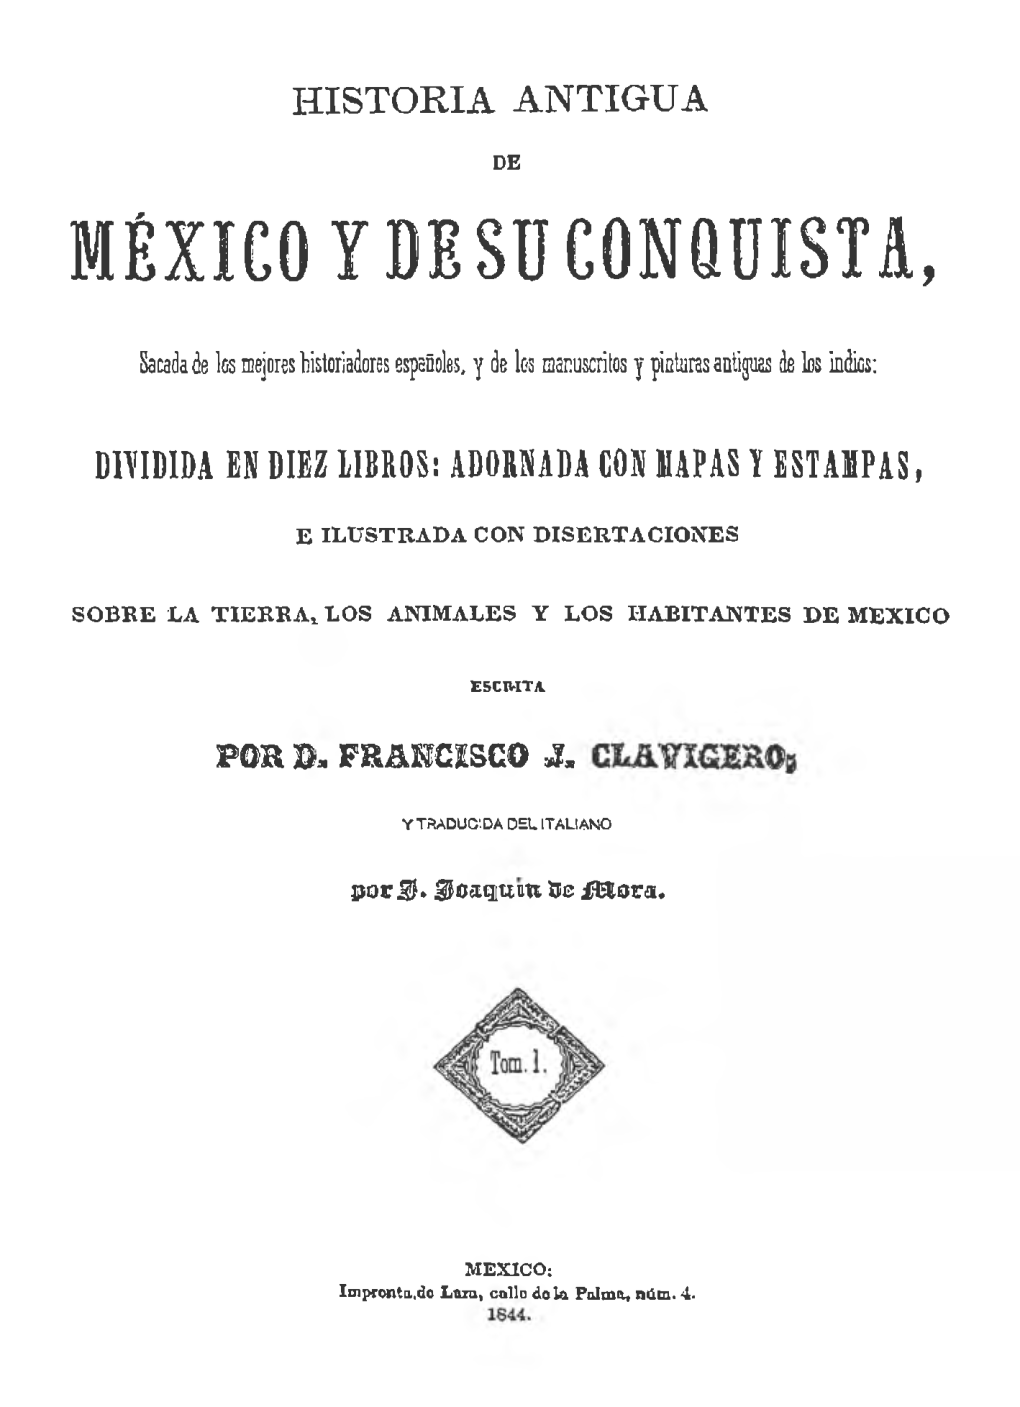 México Ydbsu Conquista